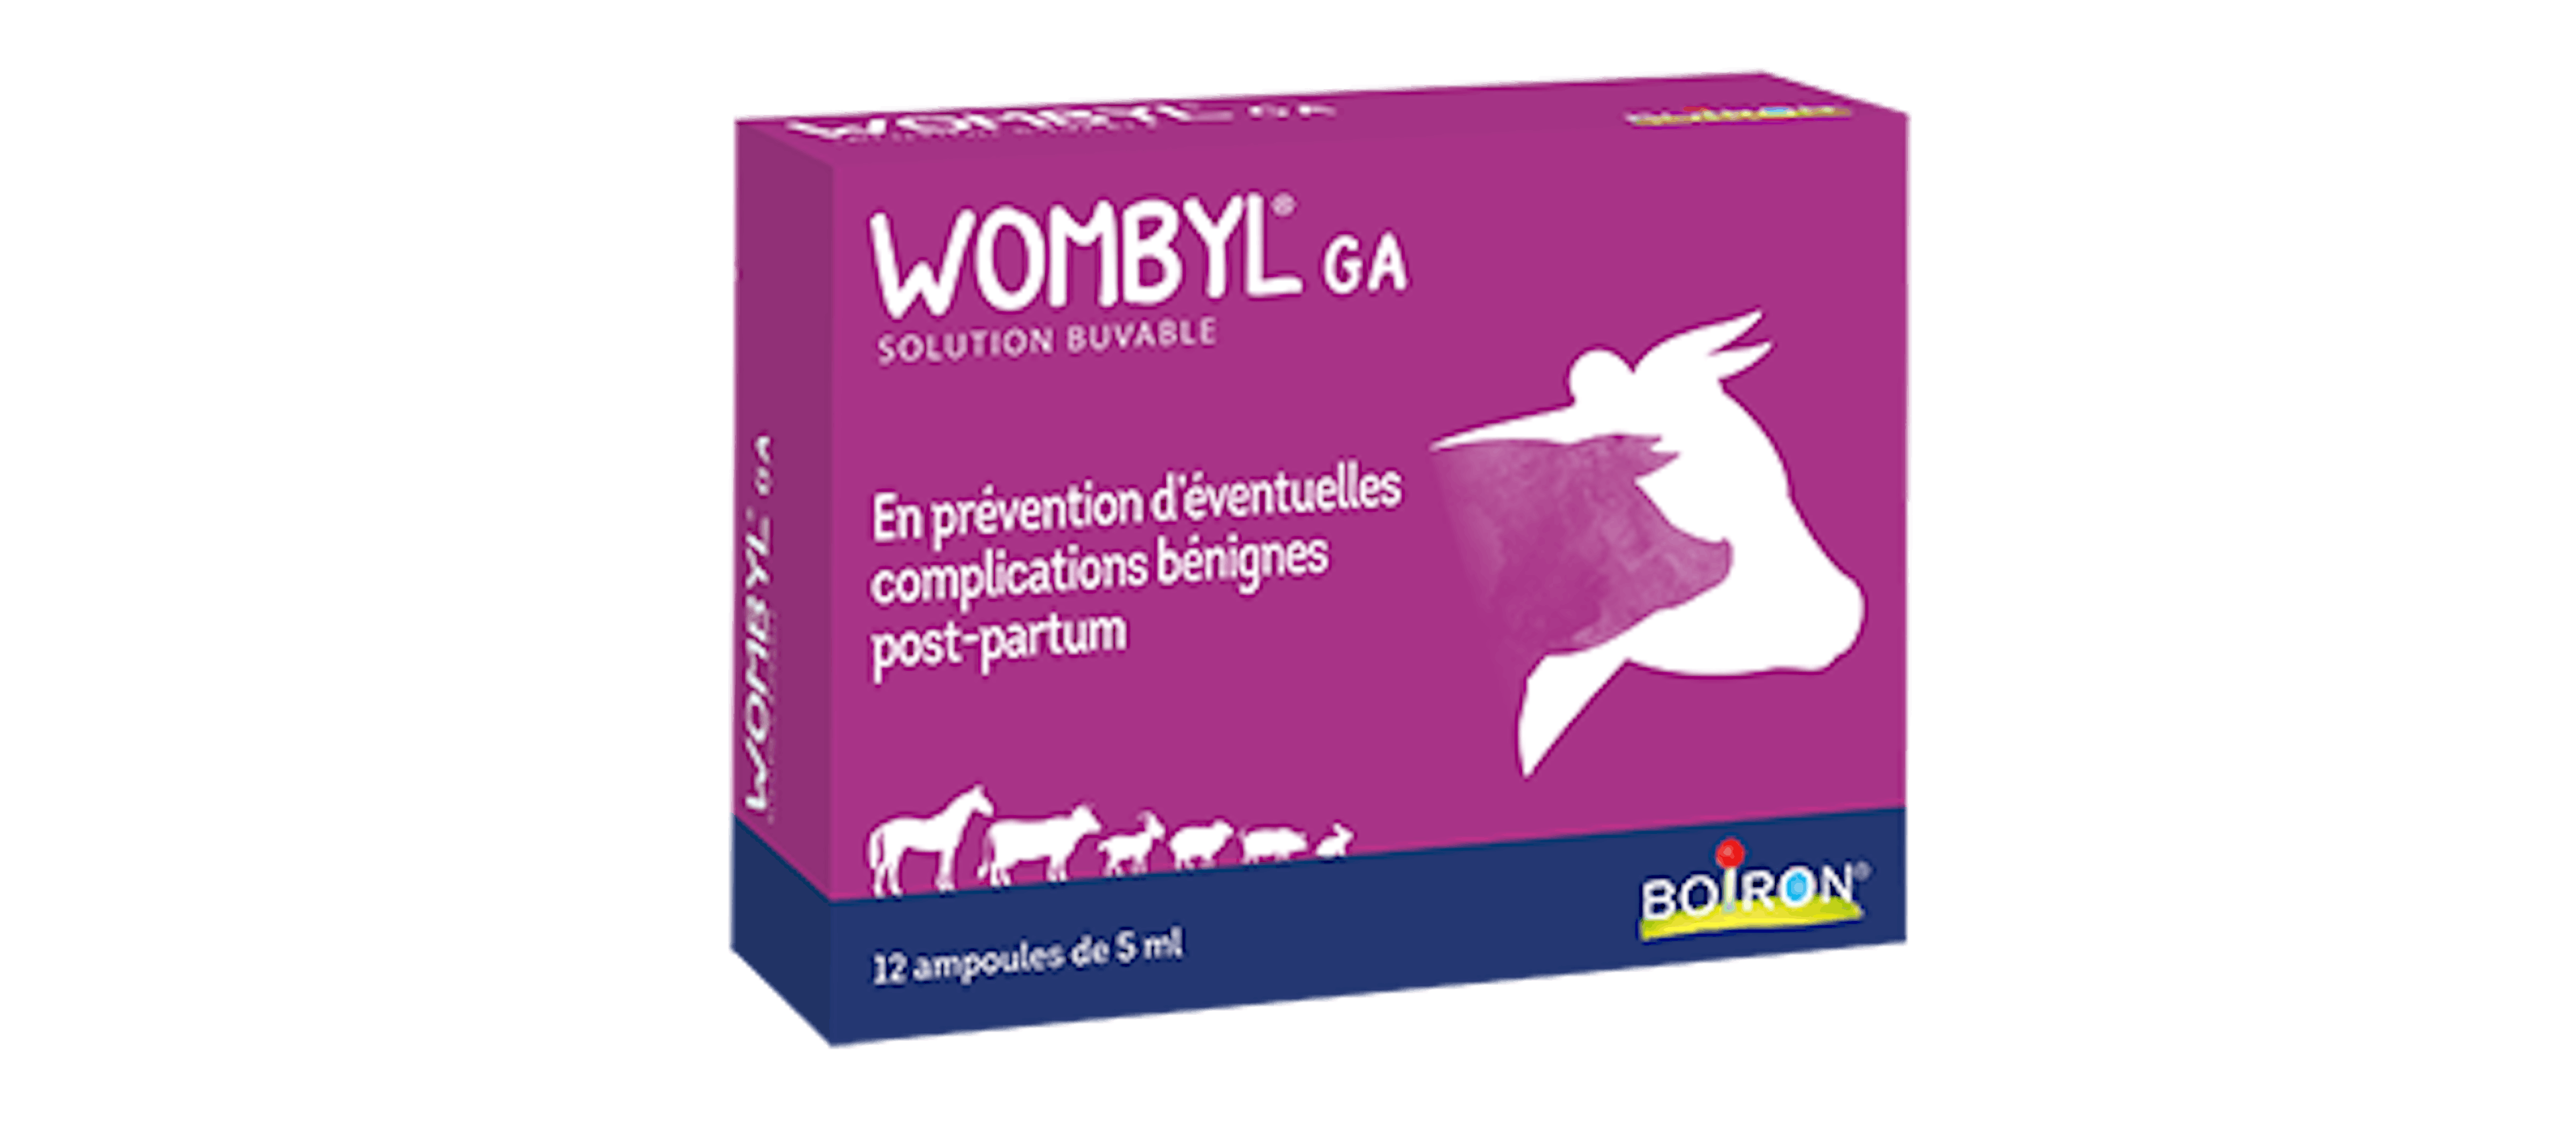 Wombyl Boiron